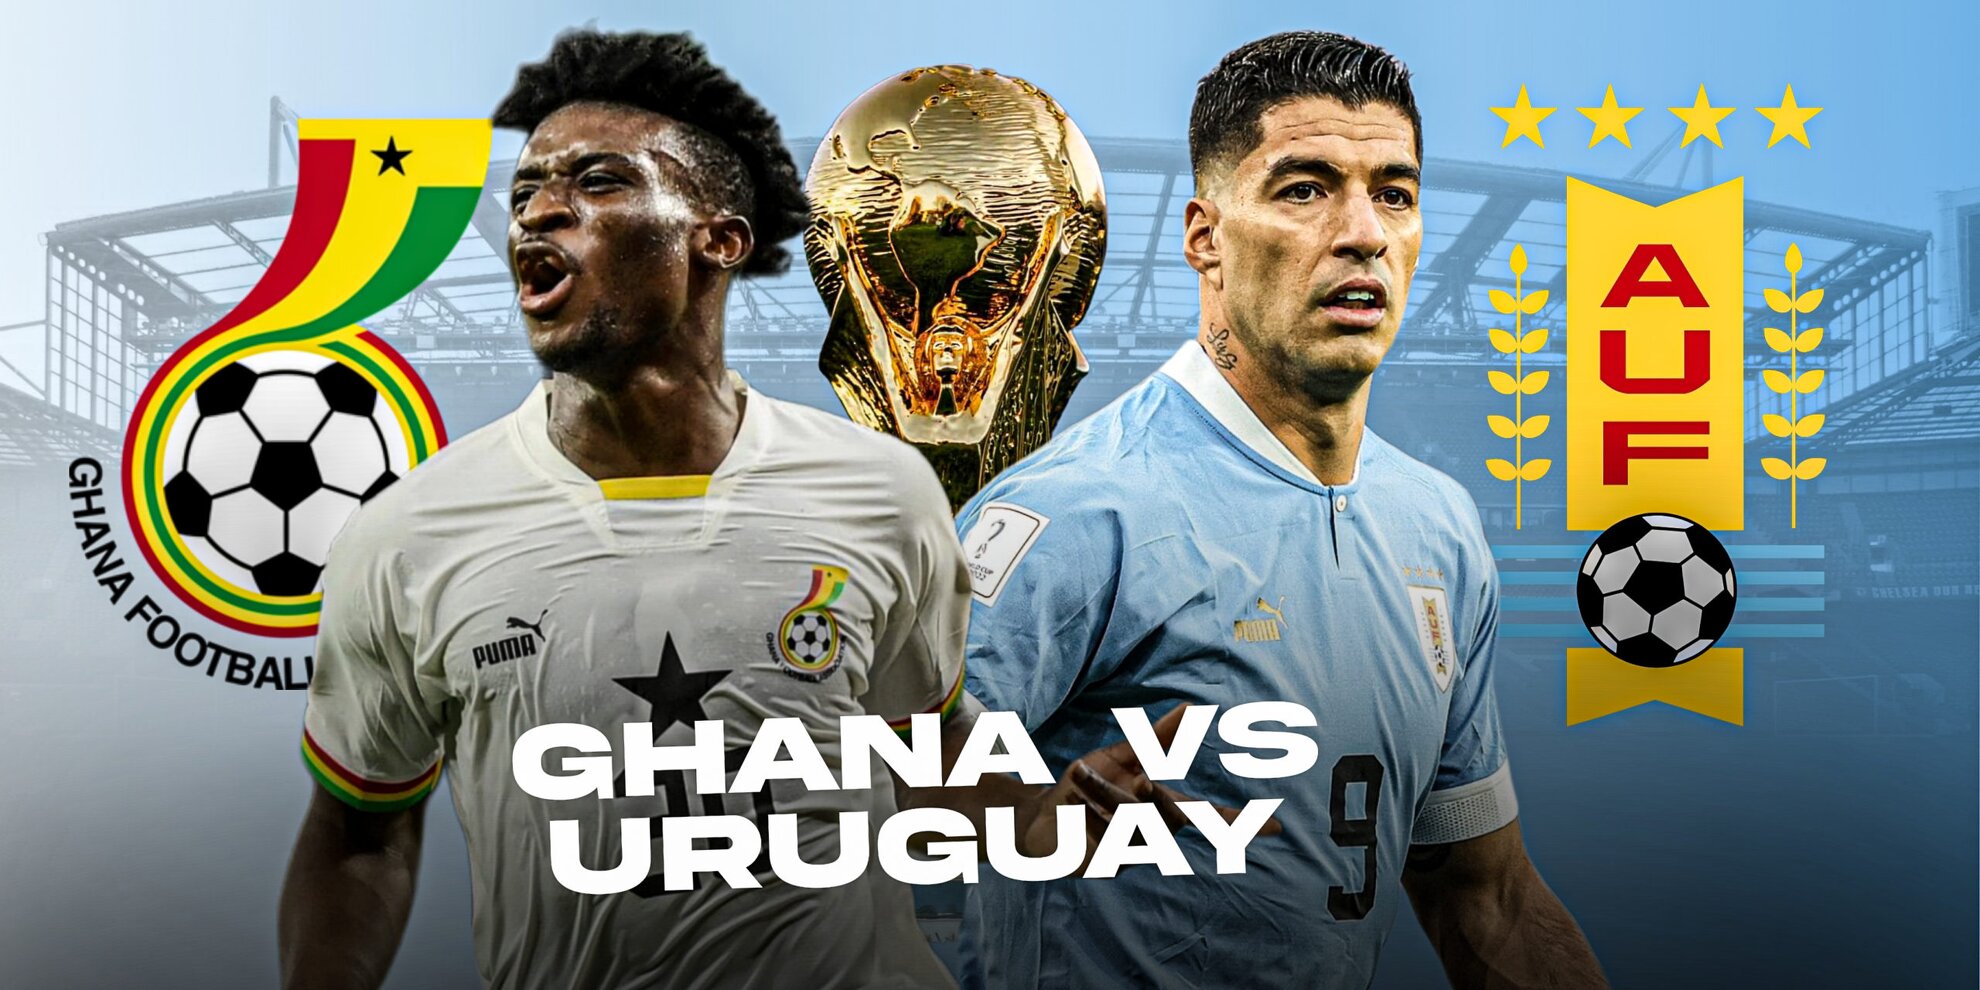 Ghana vs Uruguay: Predicted lineup, injury news, and head-to-head